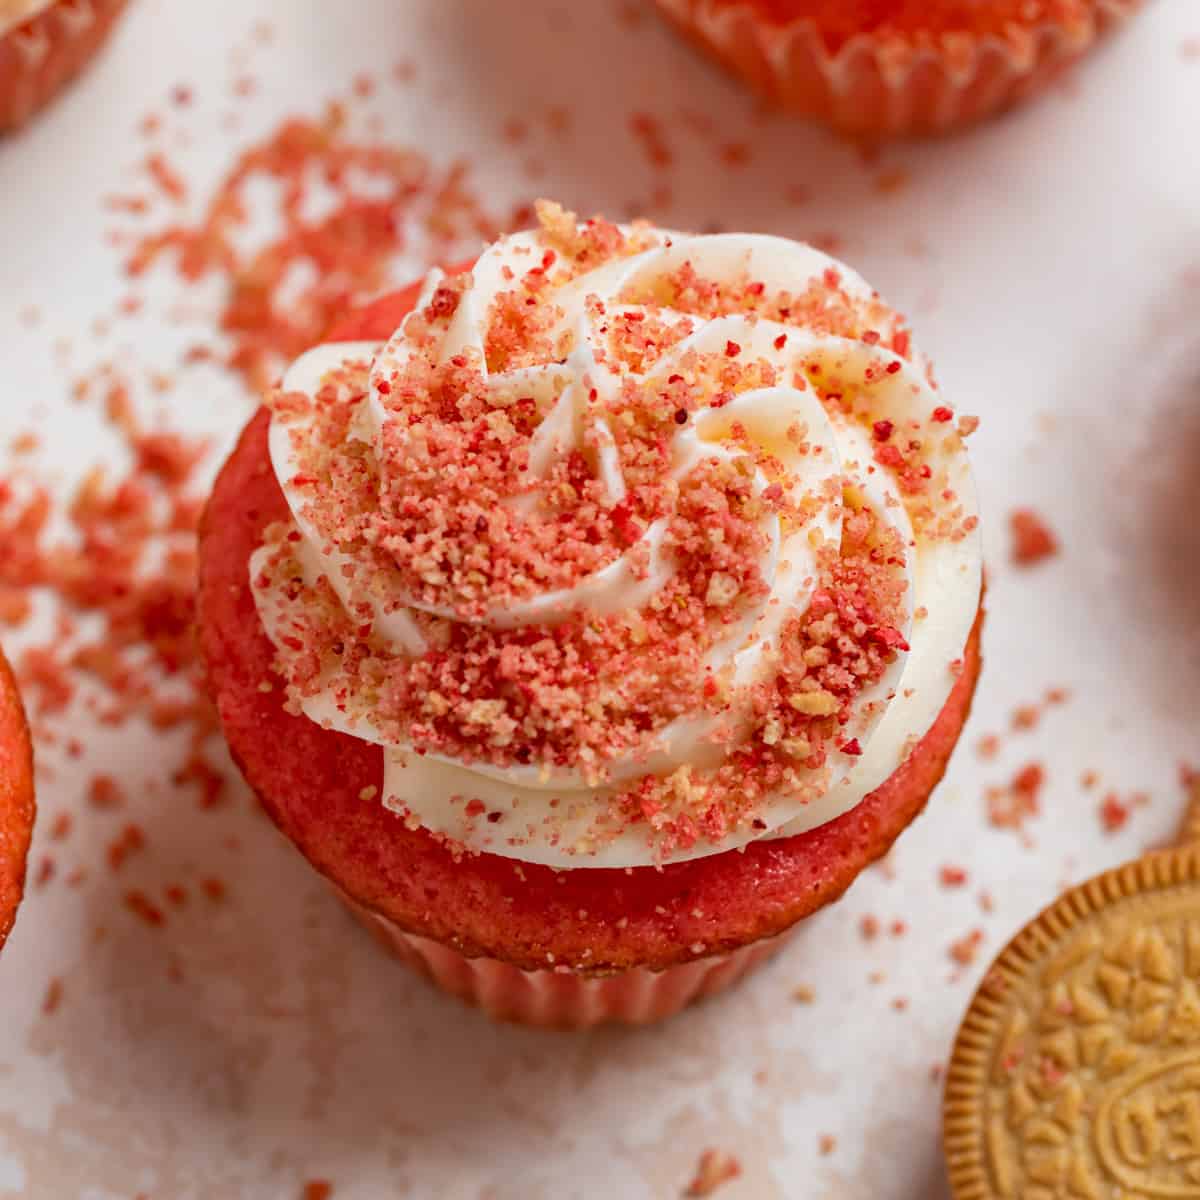 Strawberry Crunch Cupcakes – The Cozy Plum